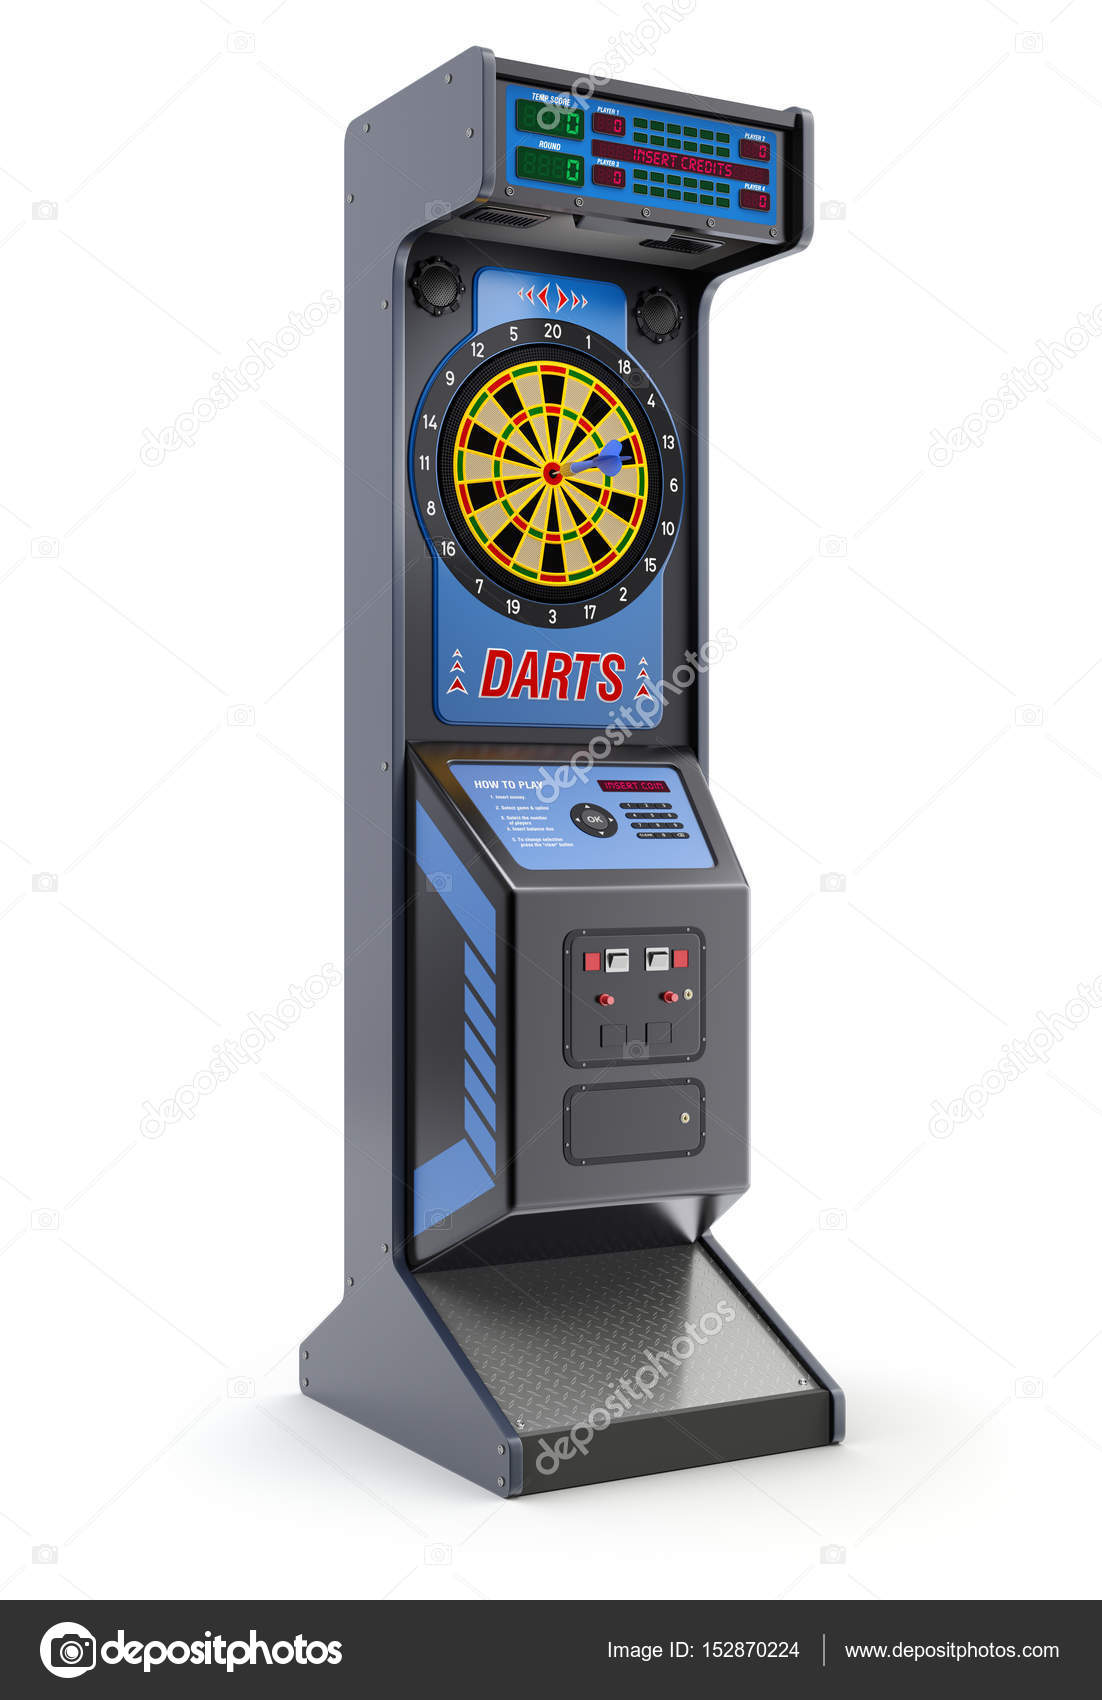 https://st3.depositphotos.com/1323882/15287/i/1600/depositphotos_152870224-stock-illustration-electronic-arcade-darts-machine.jpg